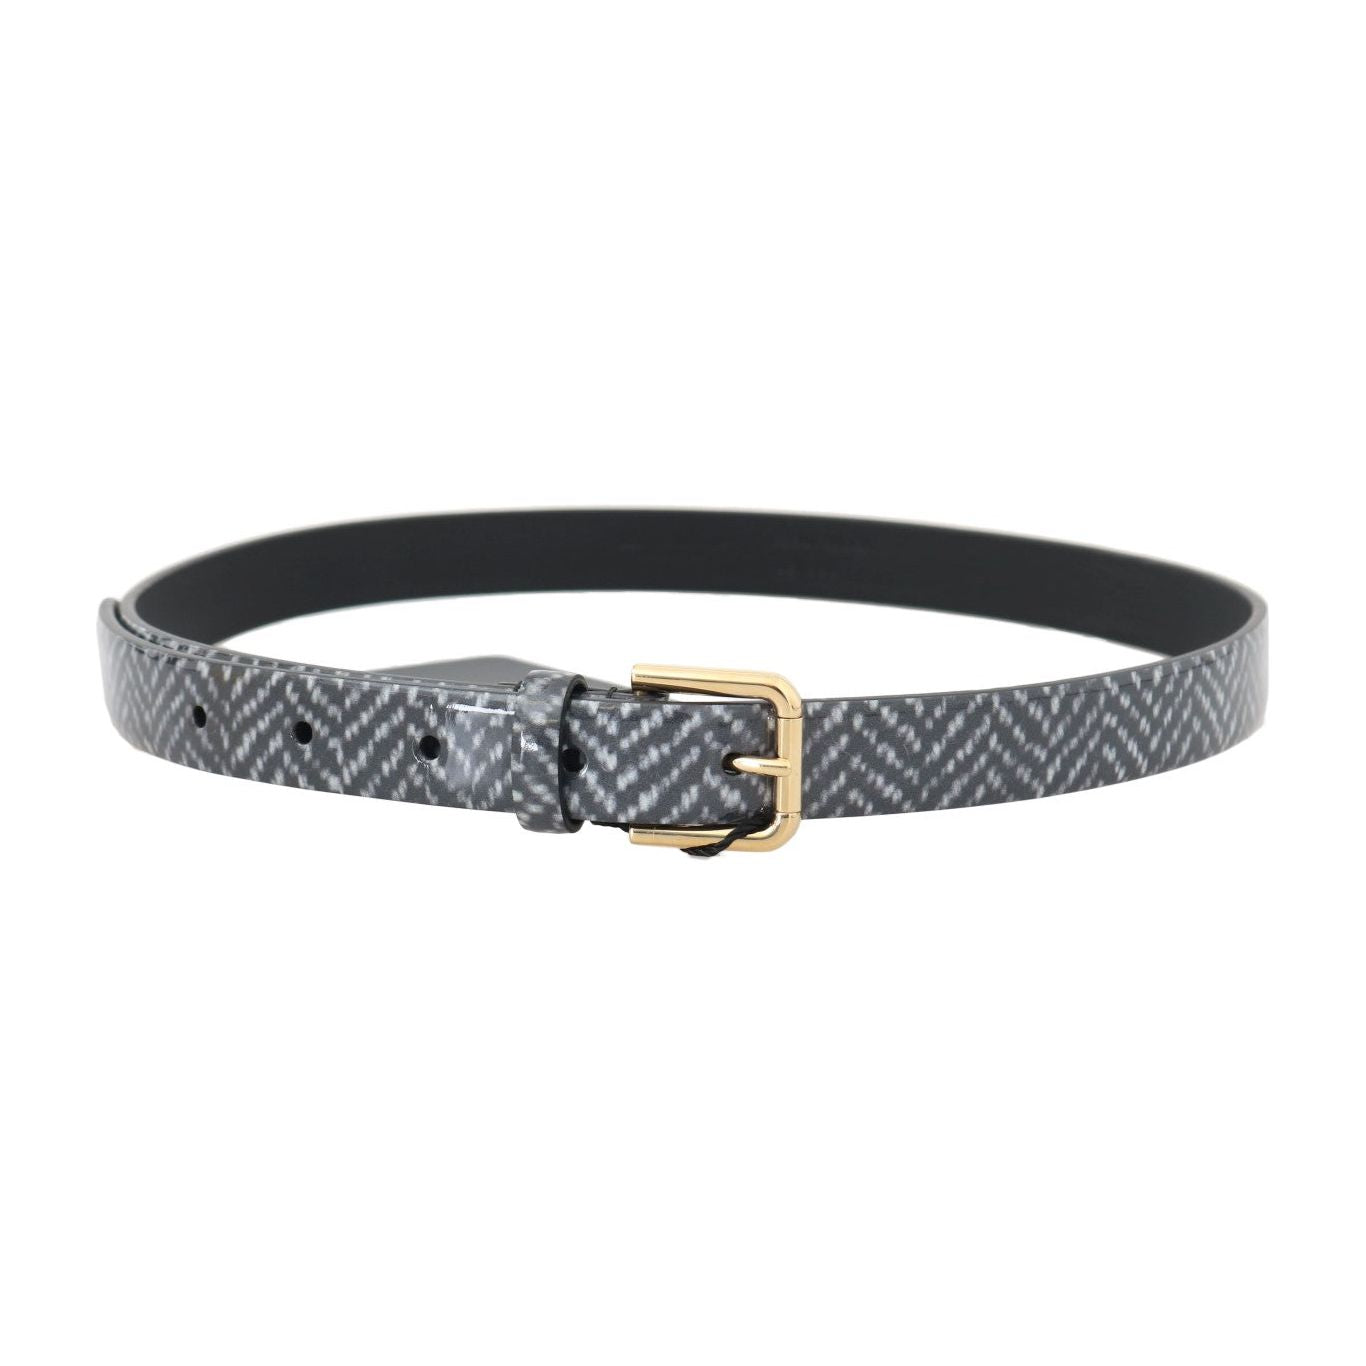 Dolce & Gabbana Elegant Chevron Leather Waist Belt Belt black-white-chevron-pattern-leather-belt 496158-black-white-chevron-pattern-leather-belt-2.jpg